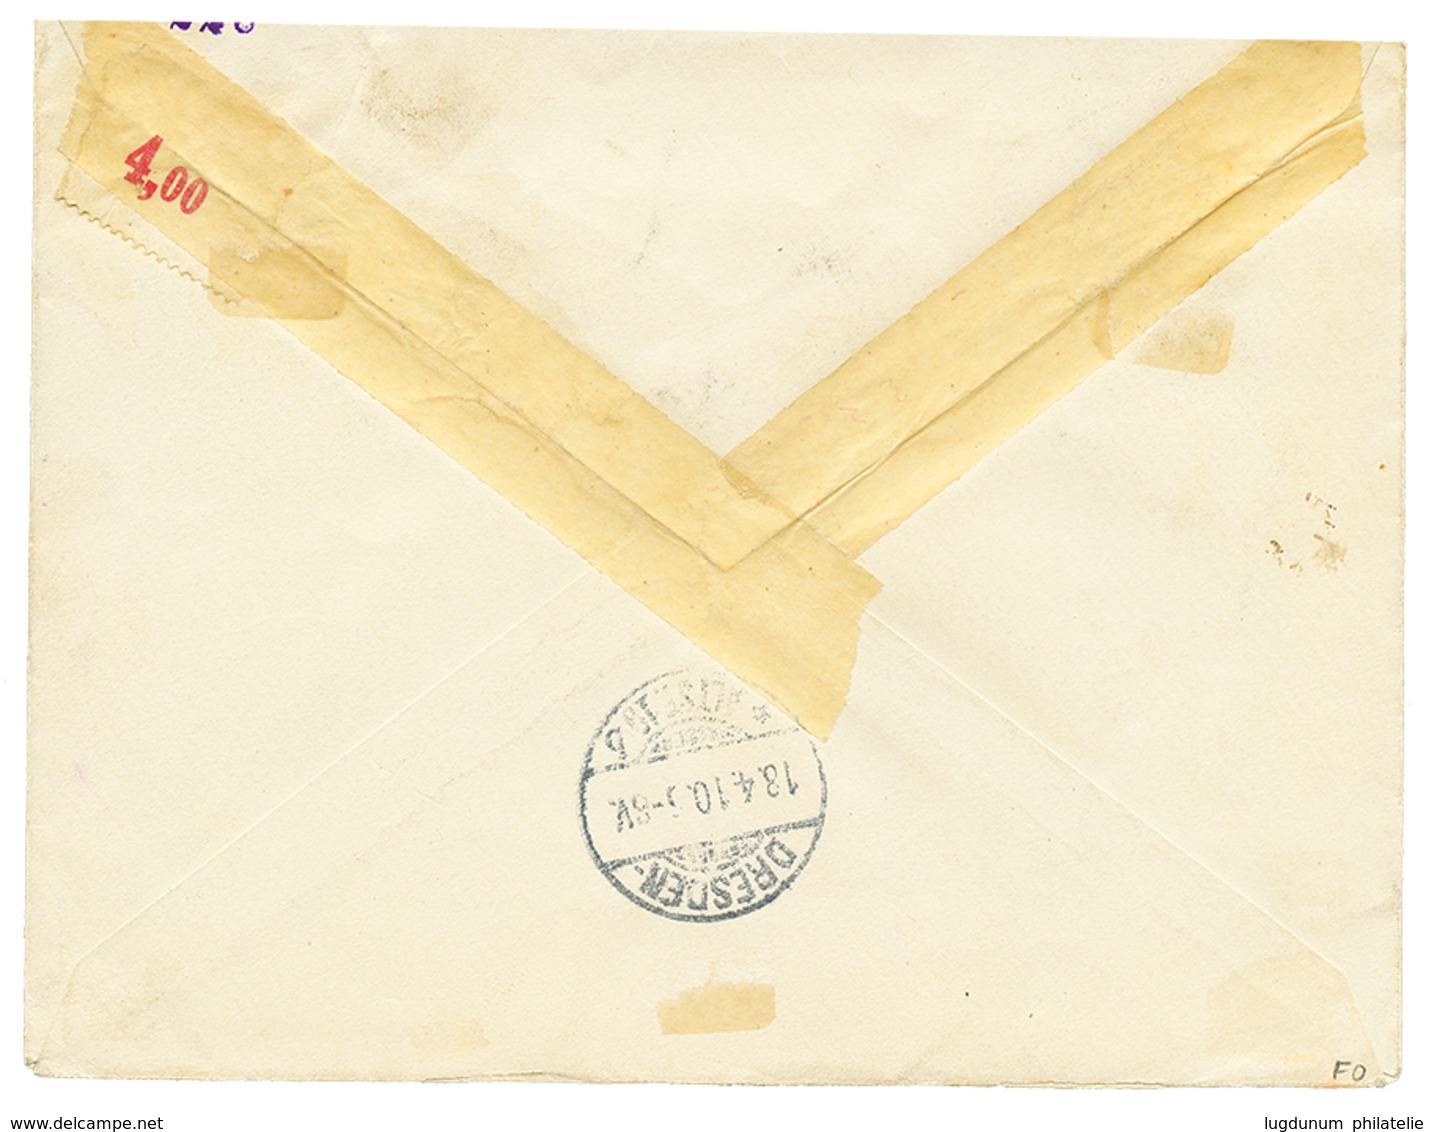 1079 1910 80pf Canc. KARIBIB On REGISTERED Envelope To GERMANY. Vf. - Deutsch-Südwestafrika